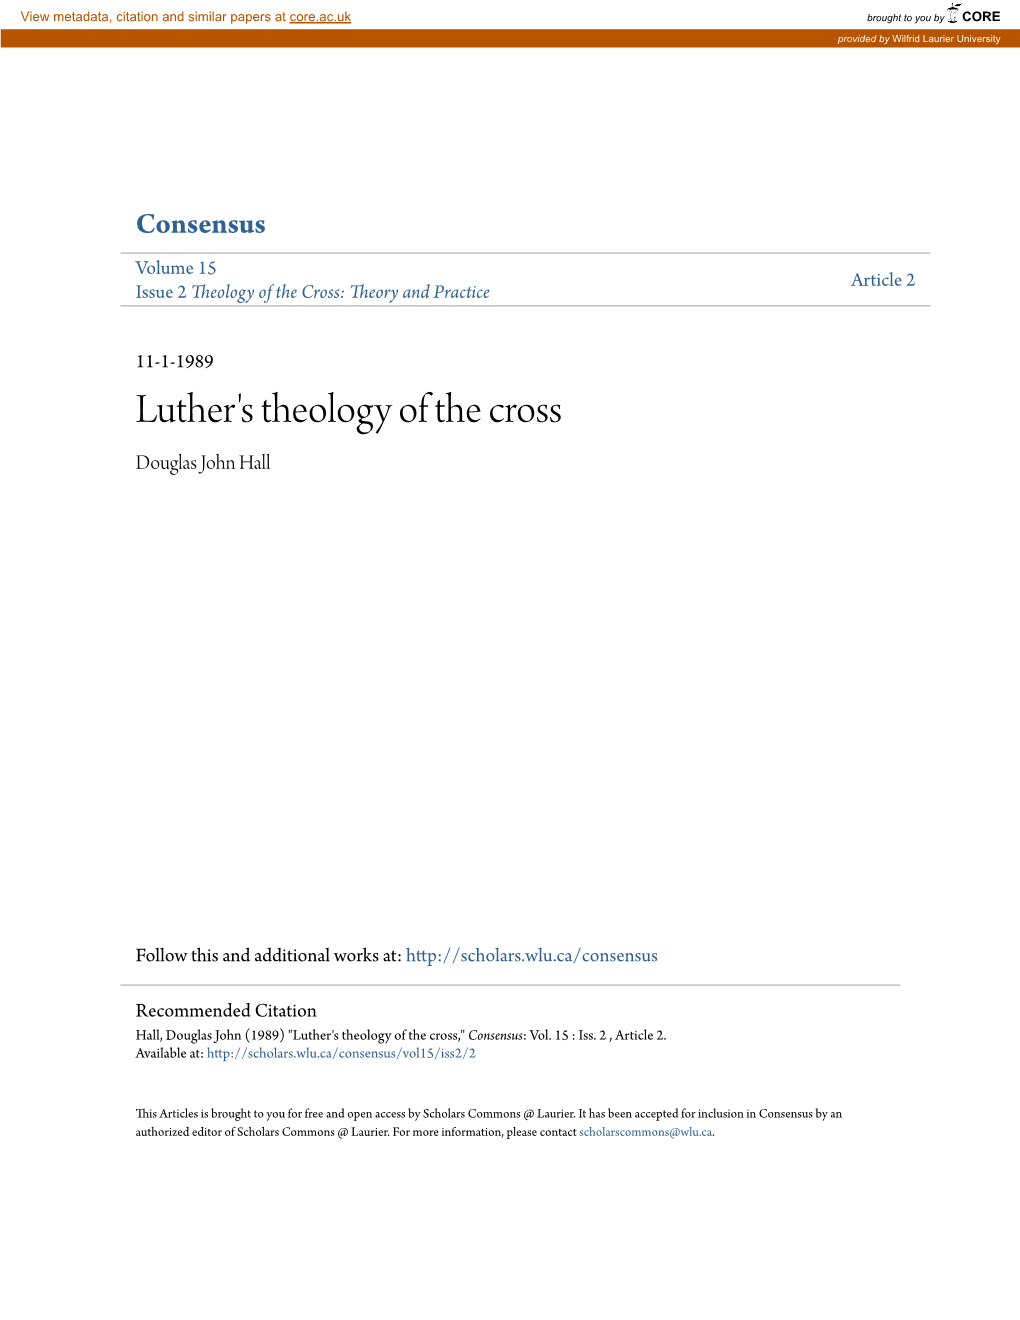 Luther's Theology of the Cross Douglas John Hall